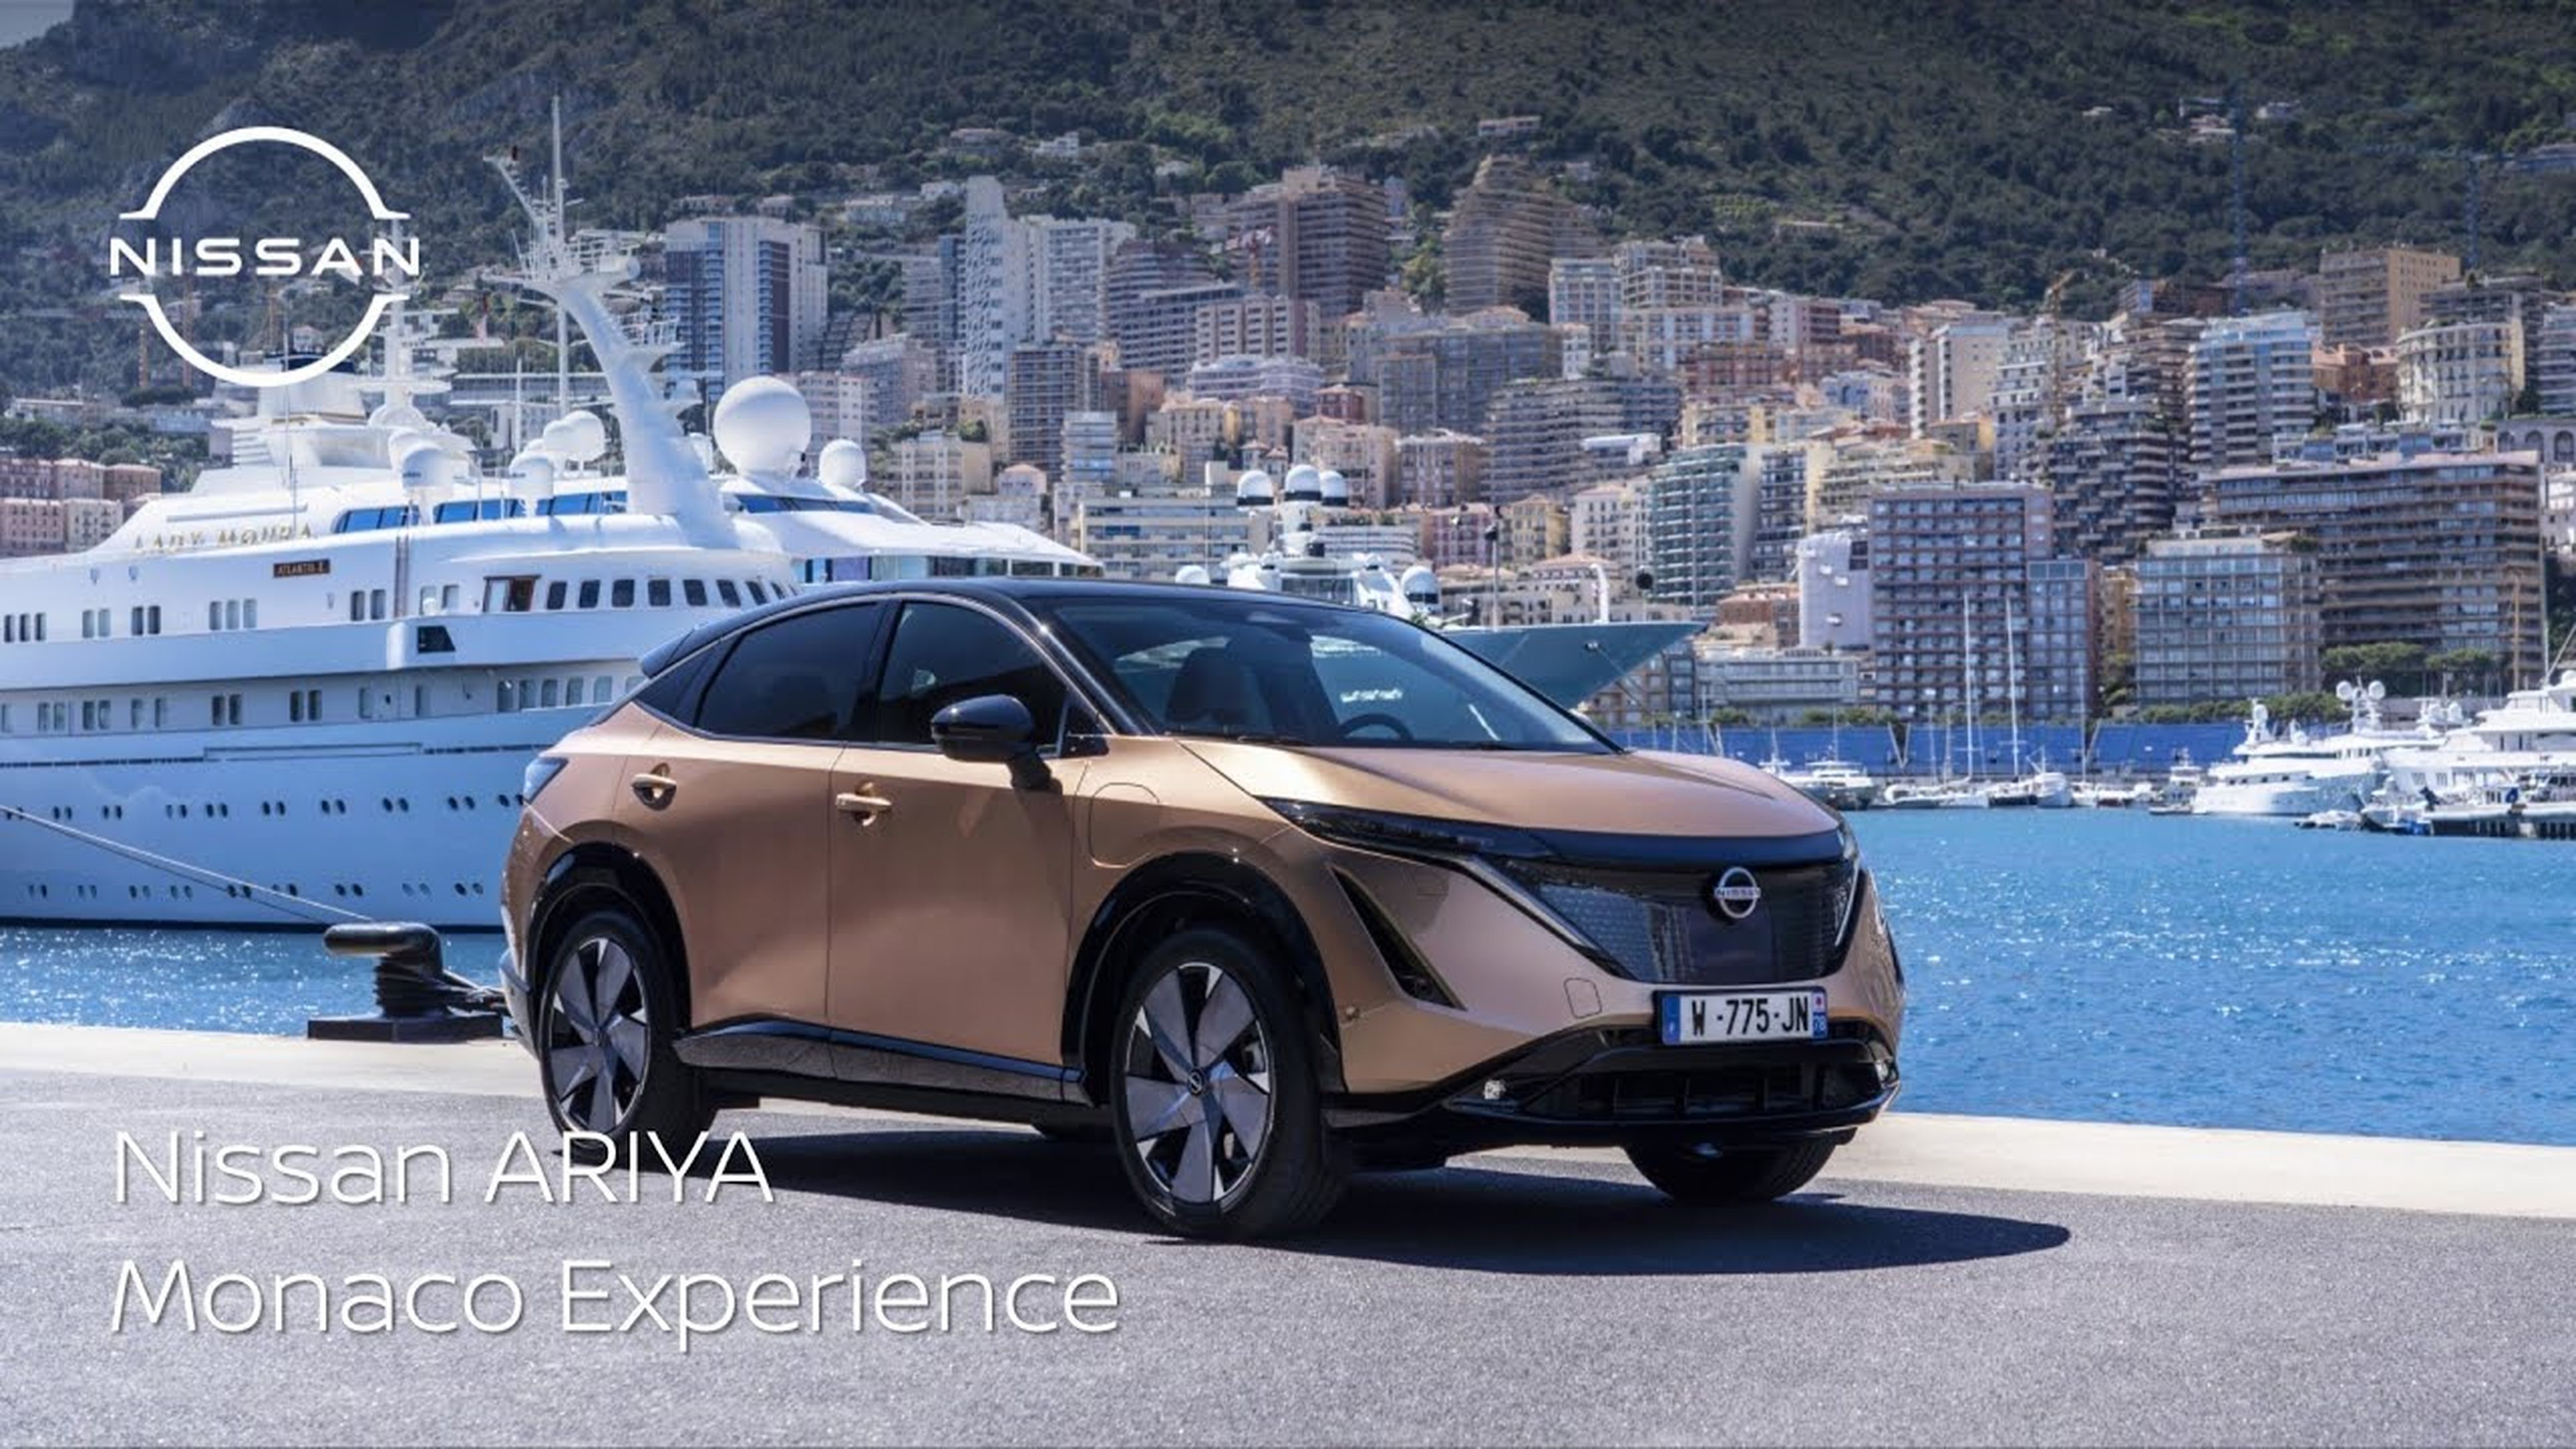 The Nissan ARIYA - A stunning debut drive on the streets of Monaco